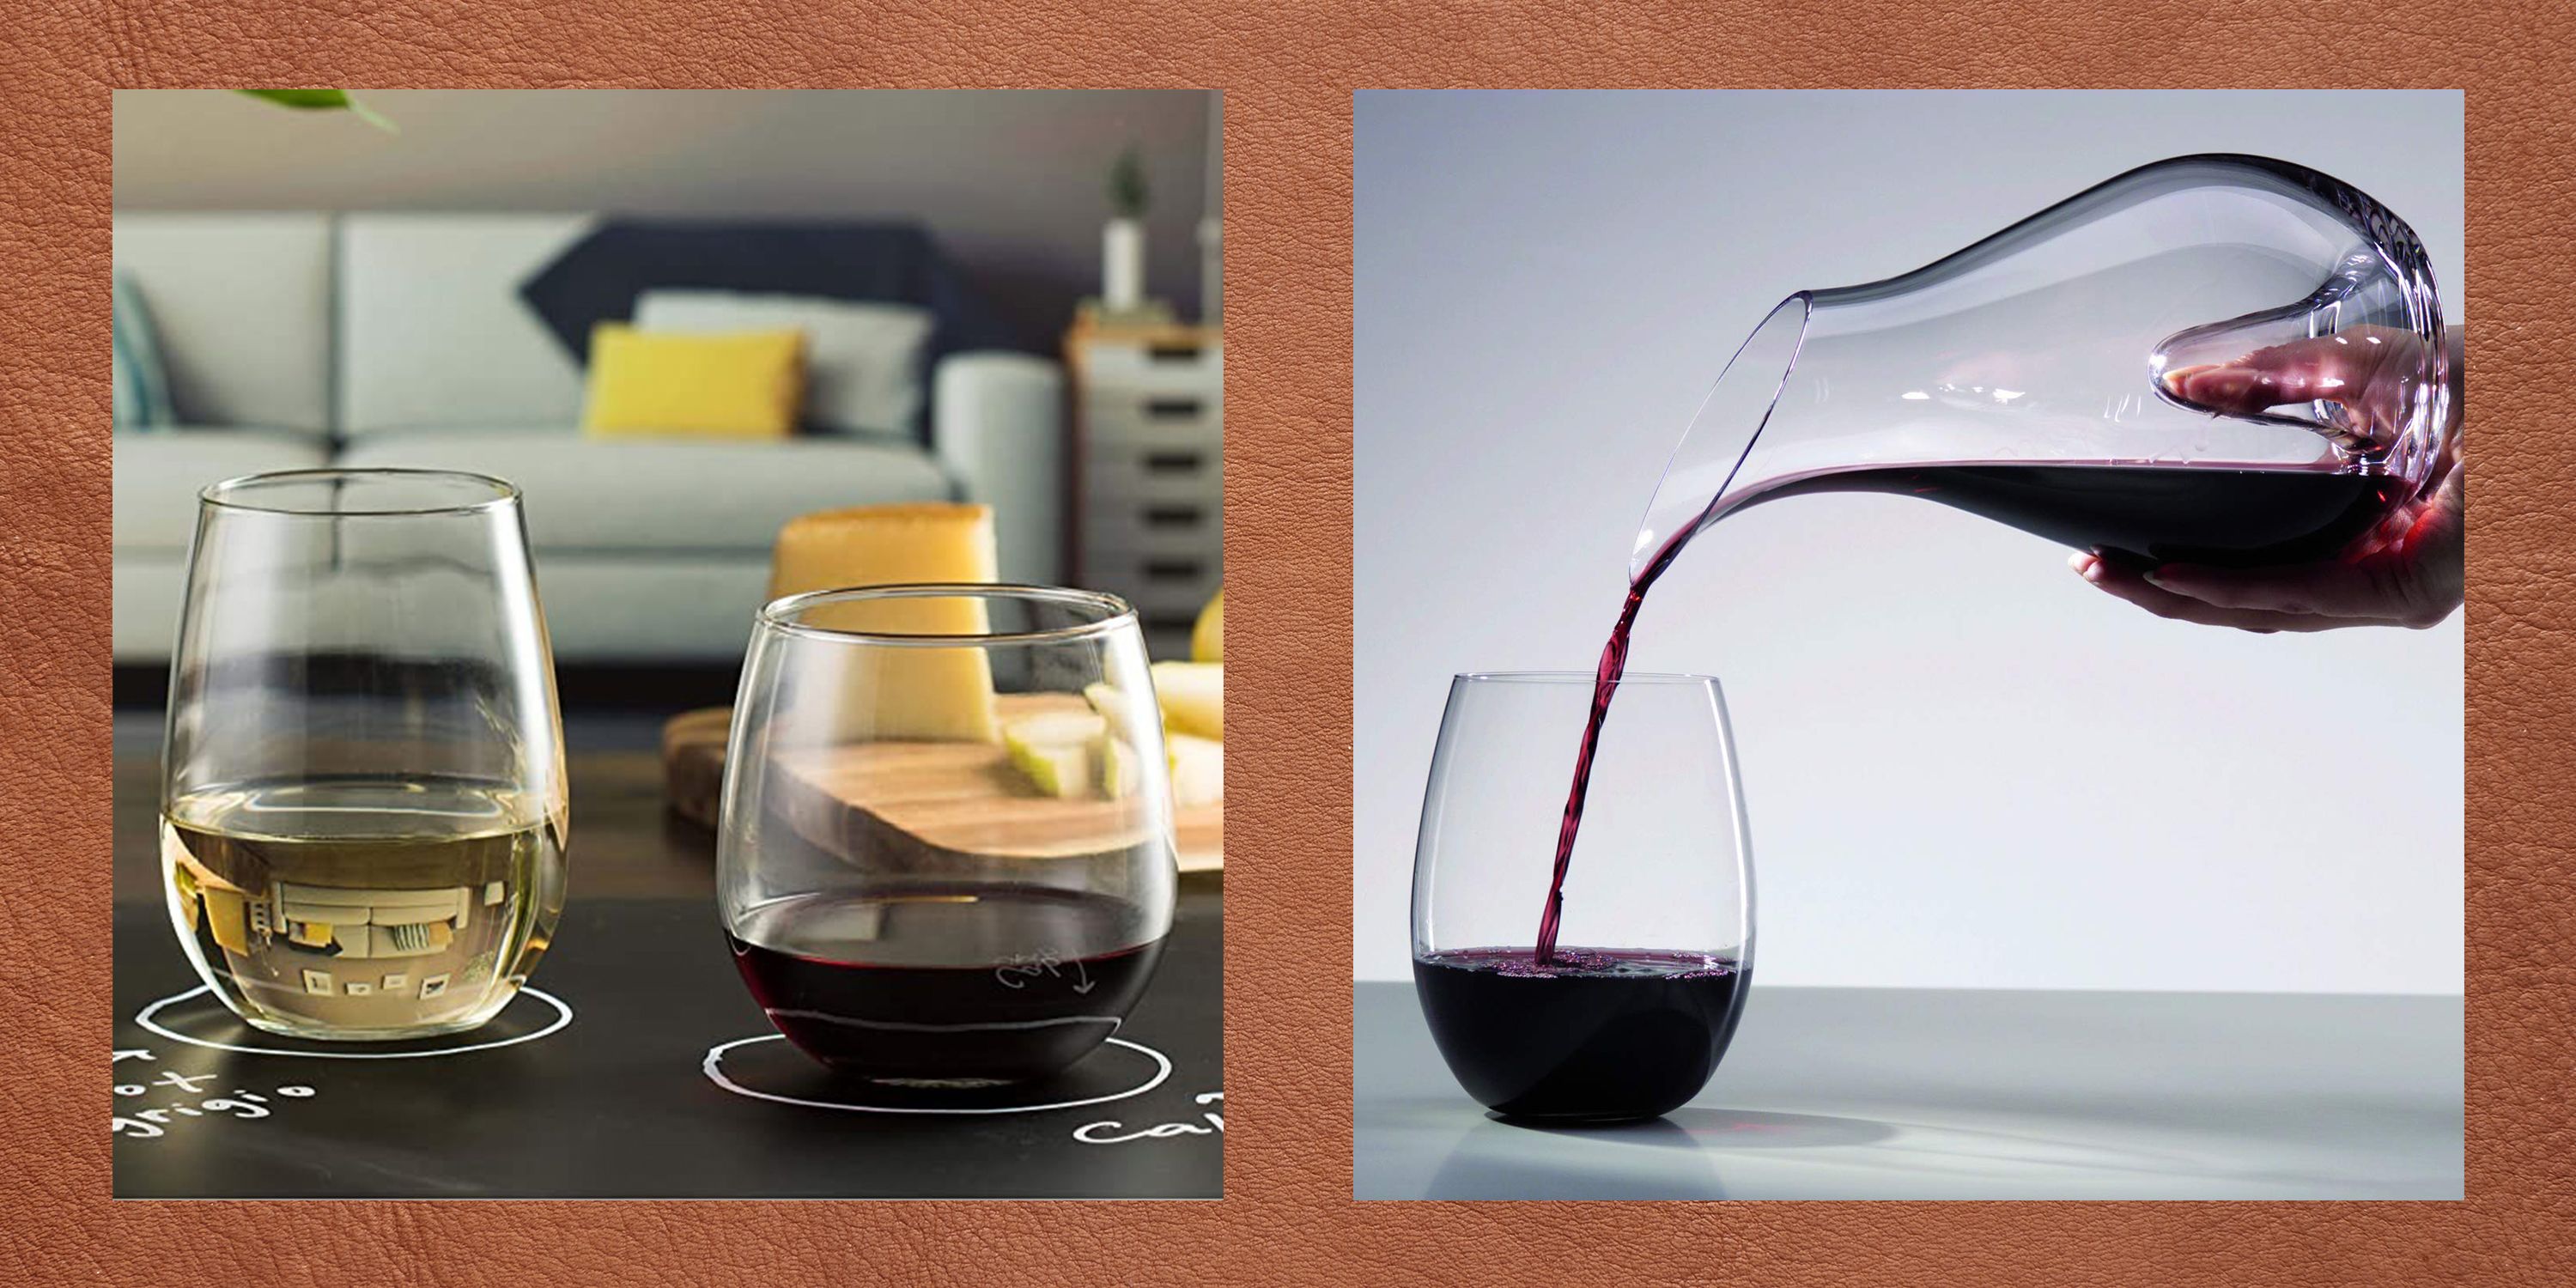 Ebern Designs Broderick 6 - Piece 13oz. Glass Stemless Wine Glass